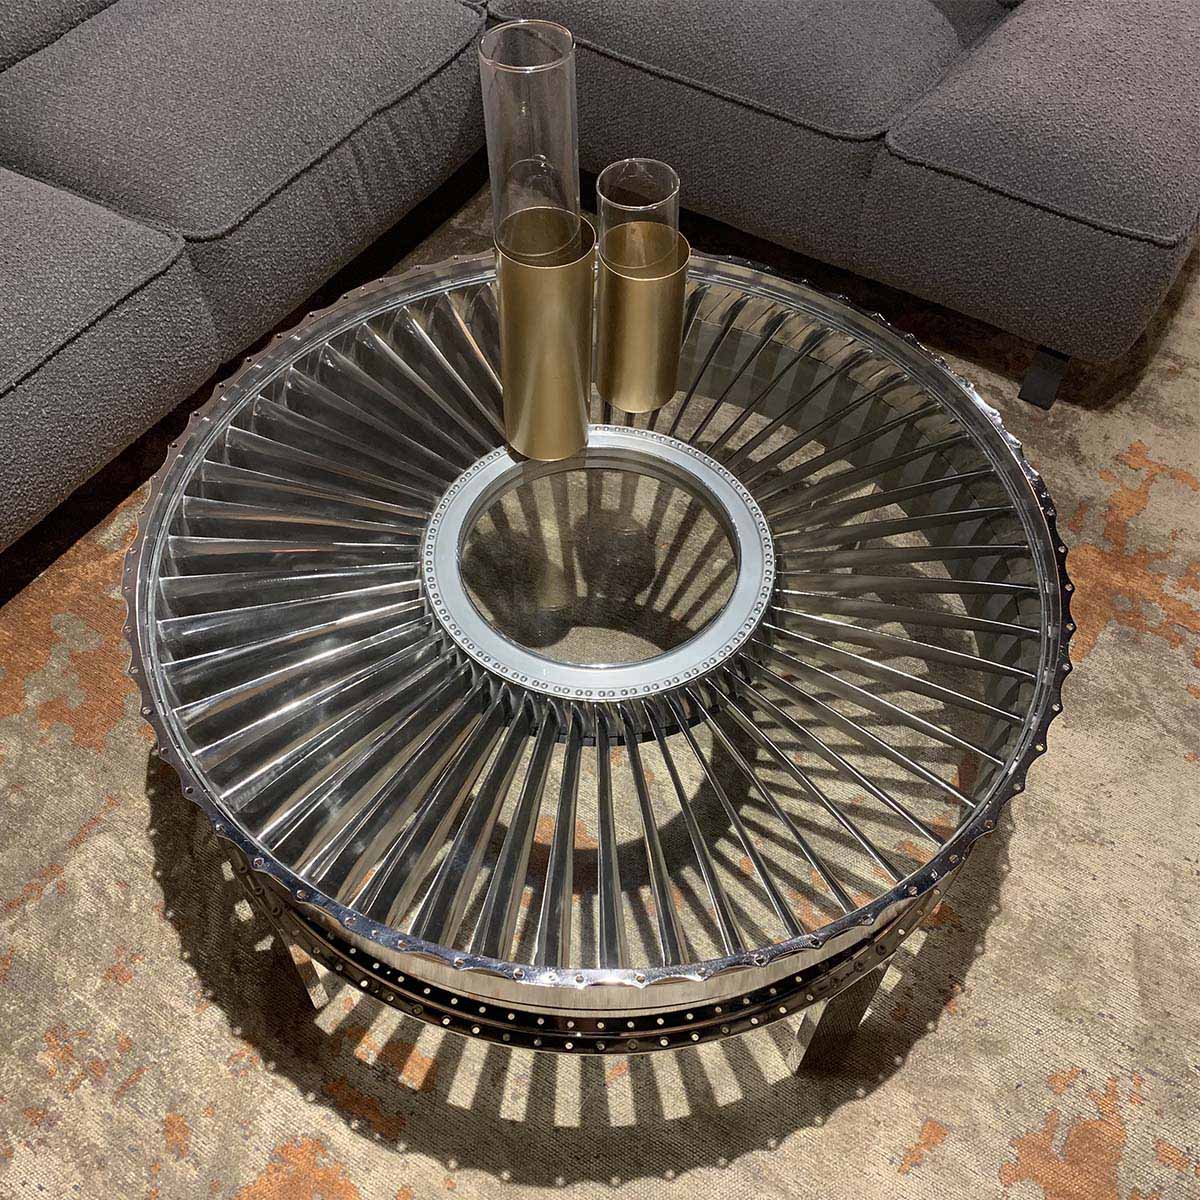 Polished rear fan case of a Pratt & Whitney JT8D turned into a table for sale.